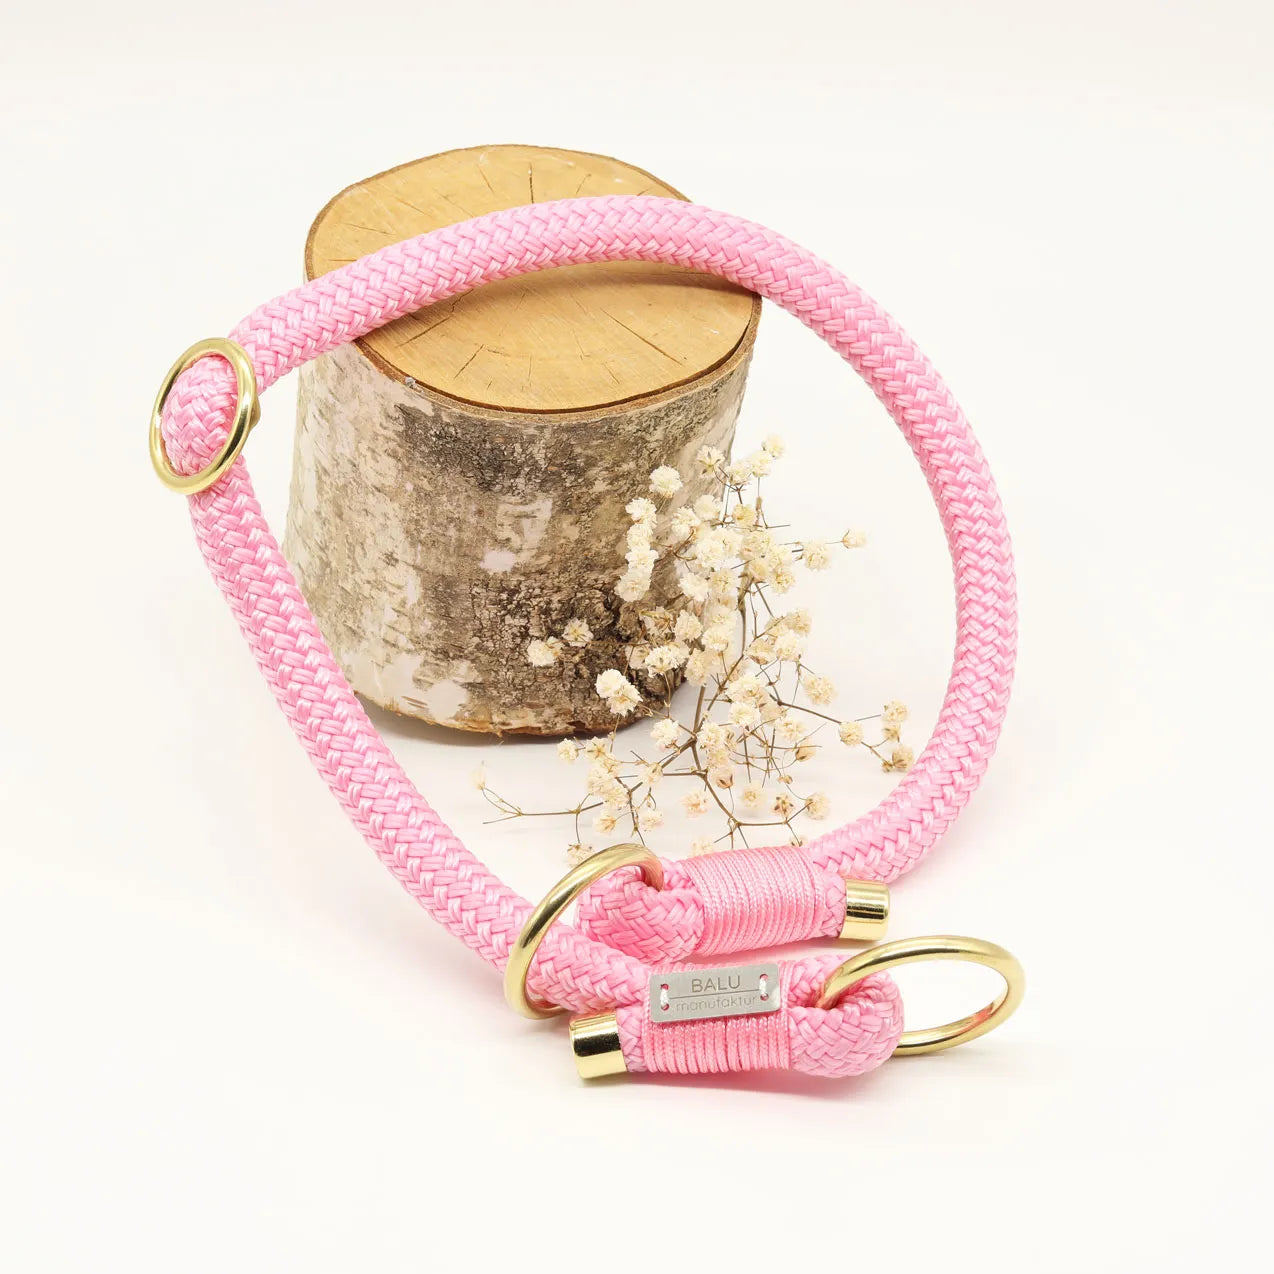 rosa Zugstopphalsband aus Seil mit goldenen Elementen